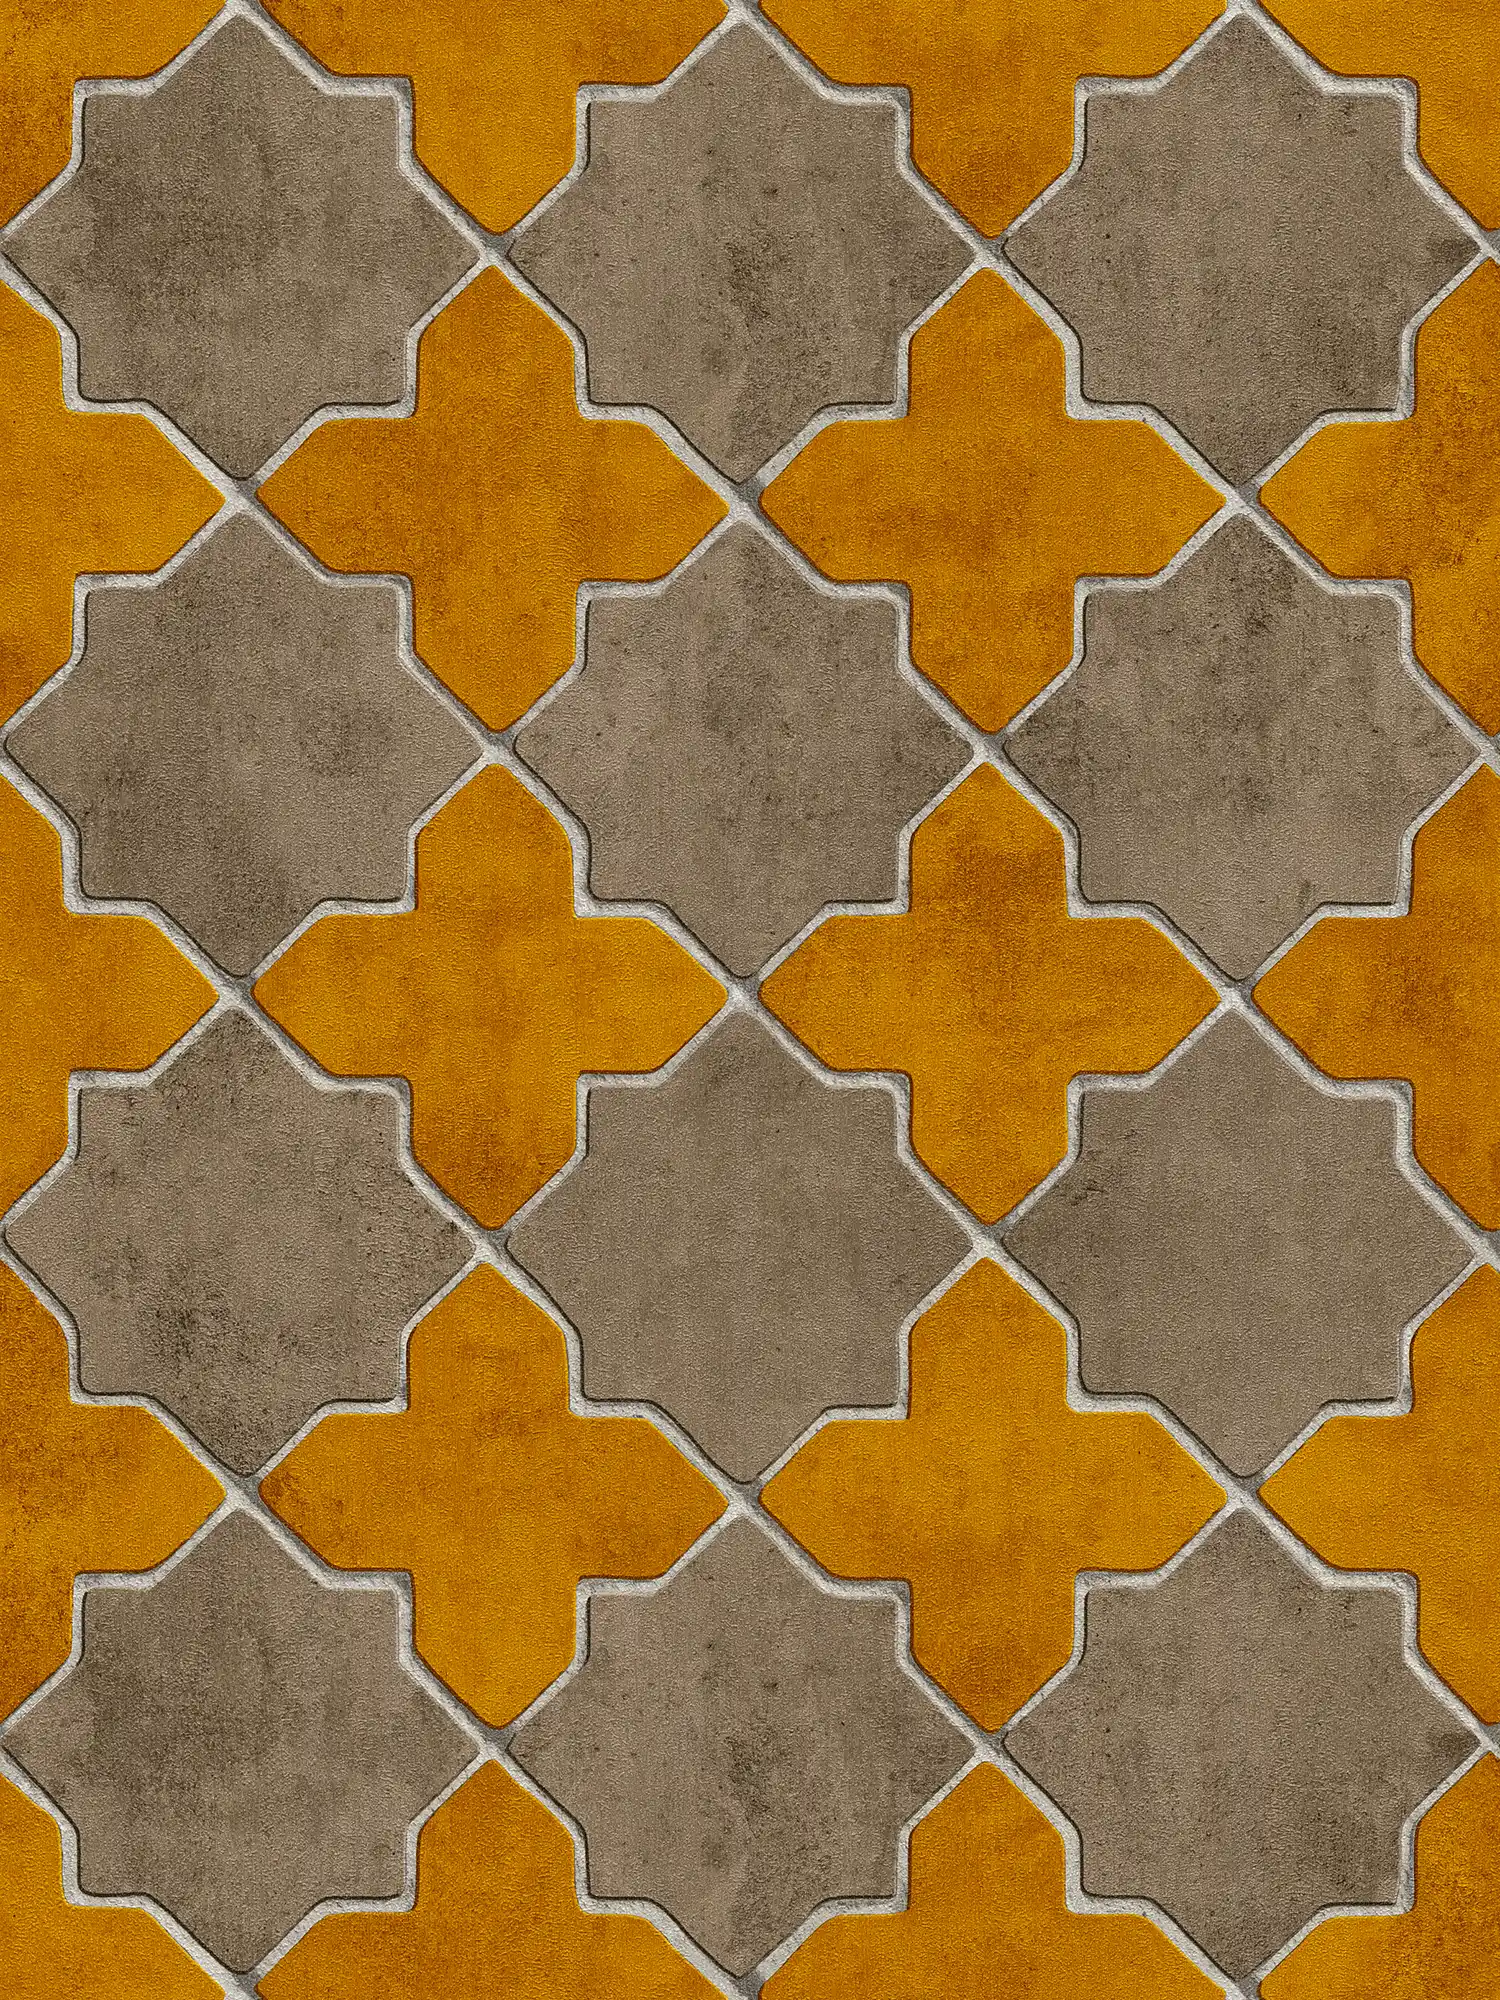 Papel pintado con aspecto de baldosa marroquí - amarillo, beige, crema
